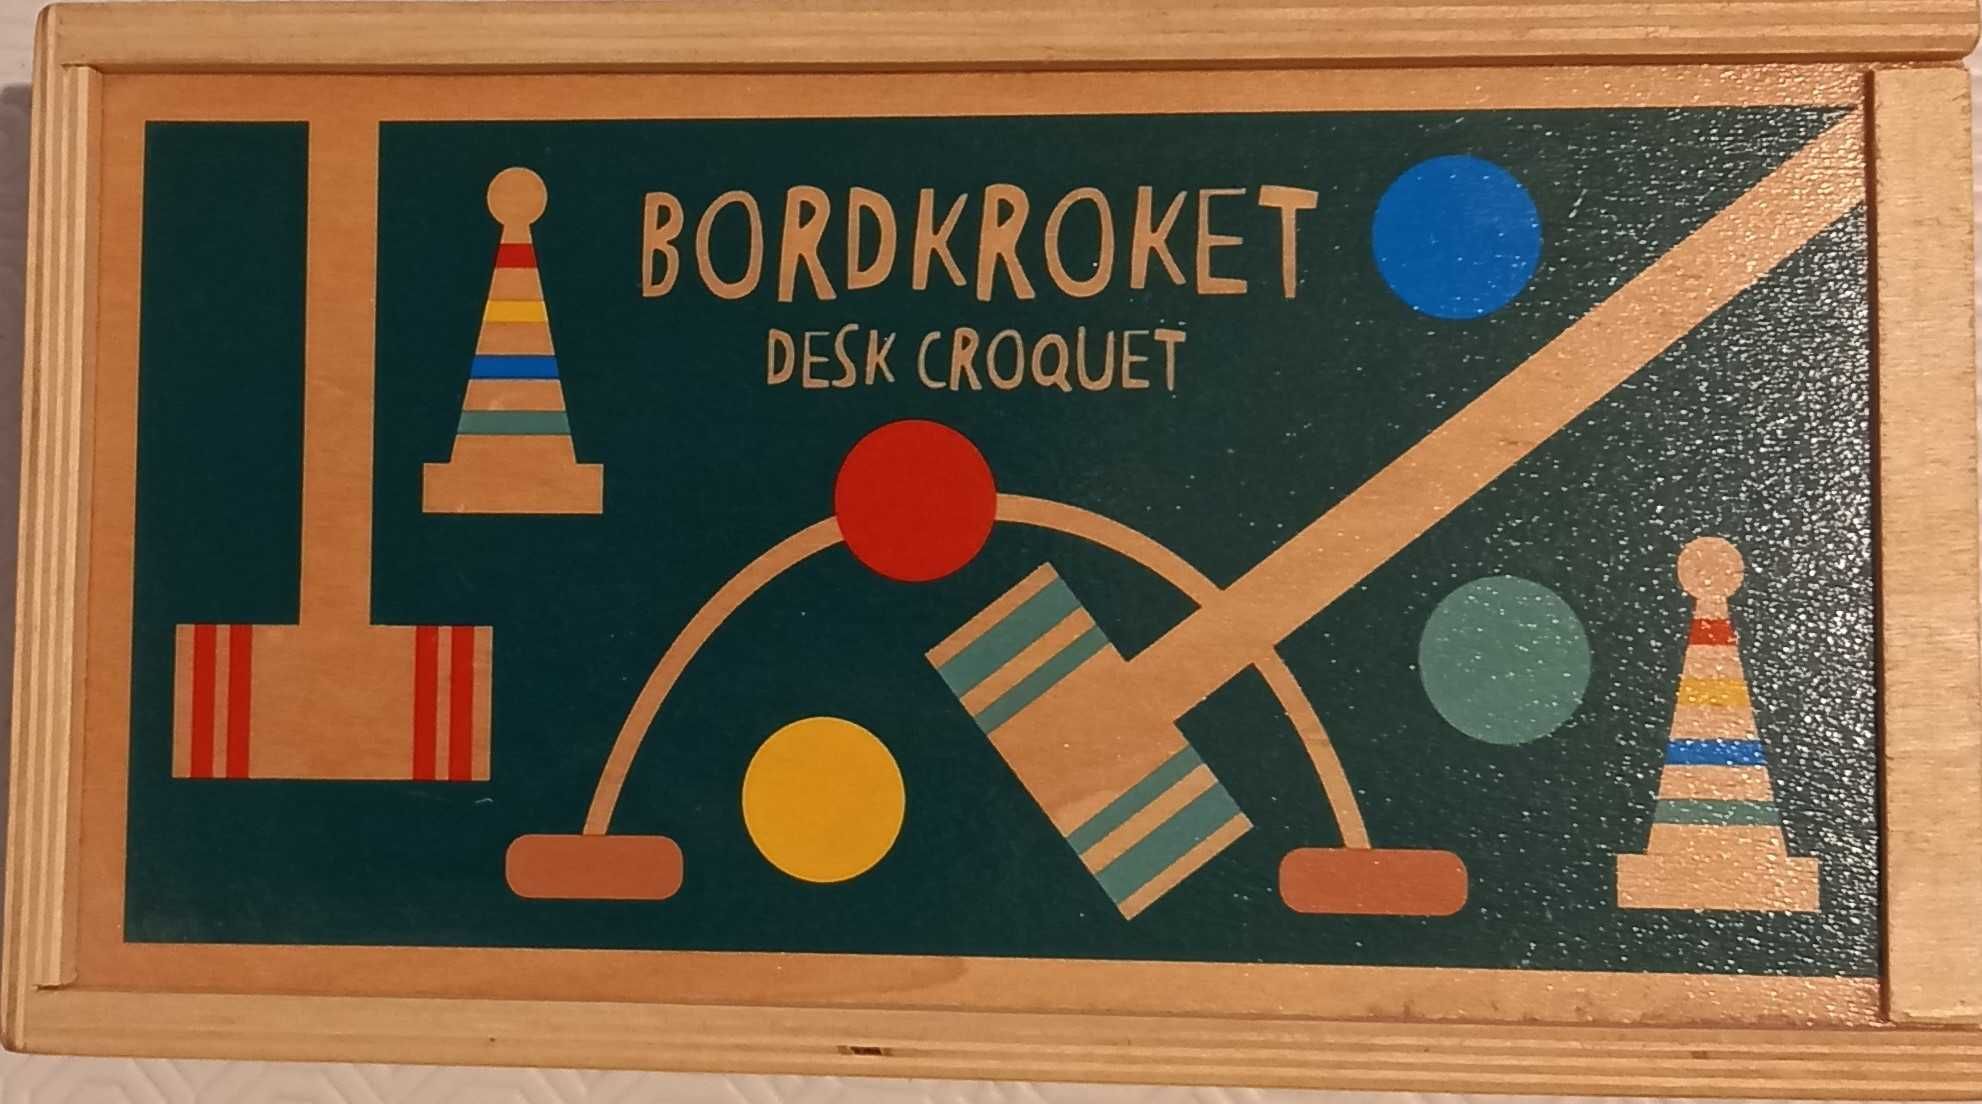 Jogo BordkRoket Desk Croquet em madeira flying tiger